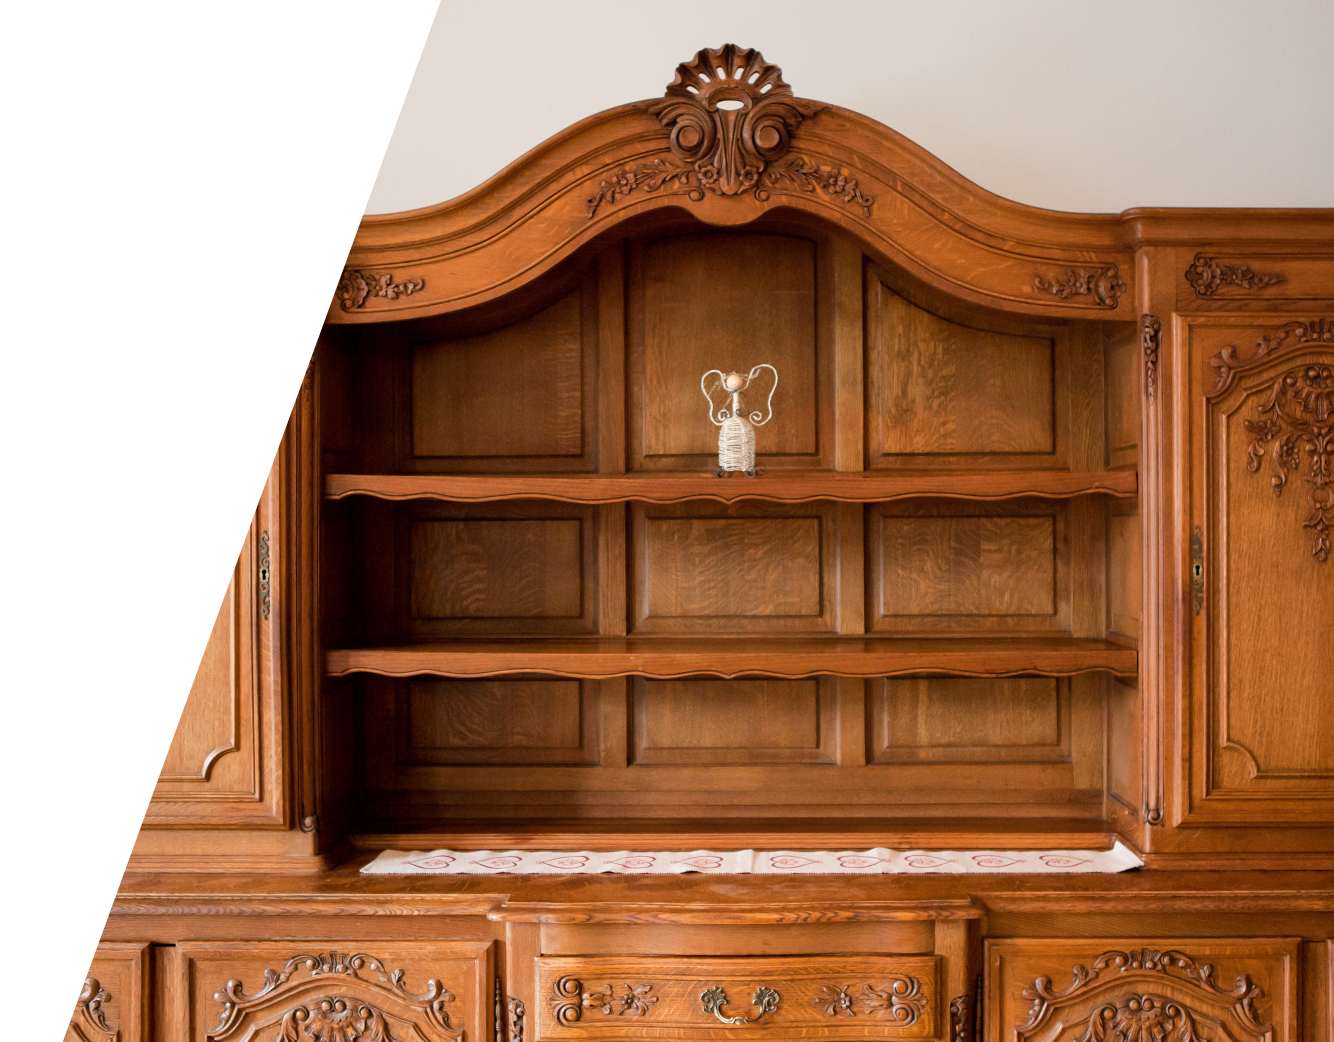 Antique furniture chest of drawers bookshelf.